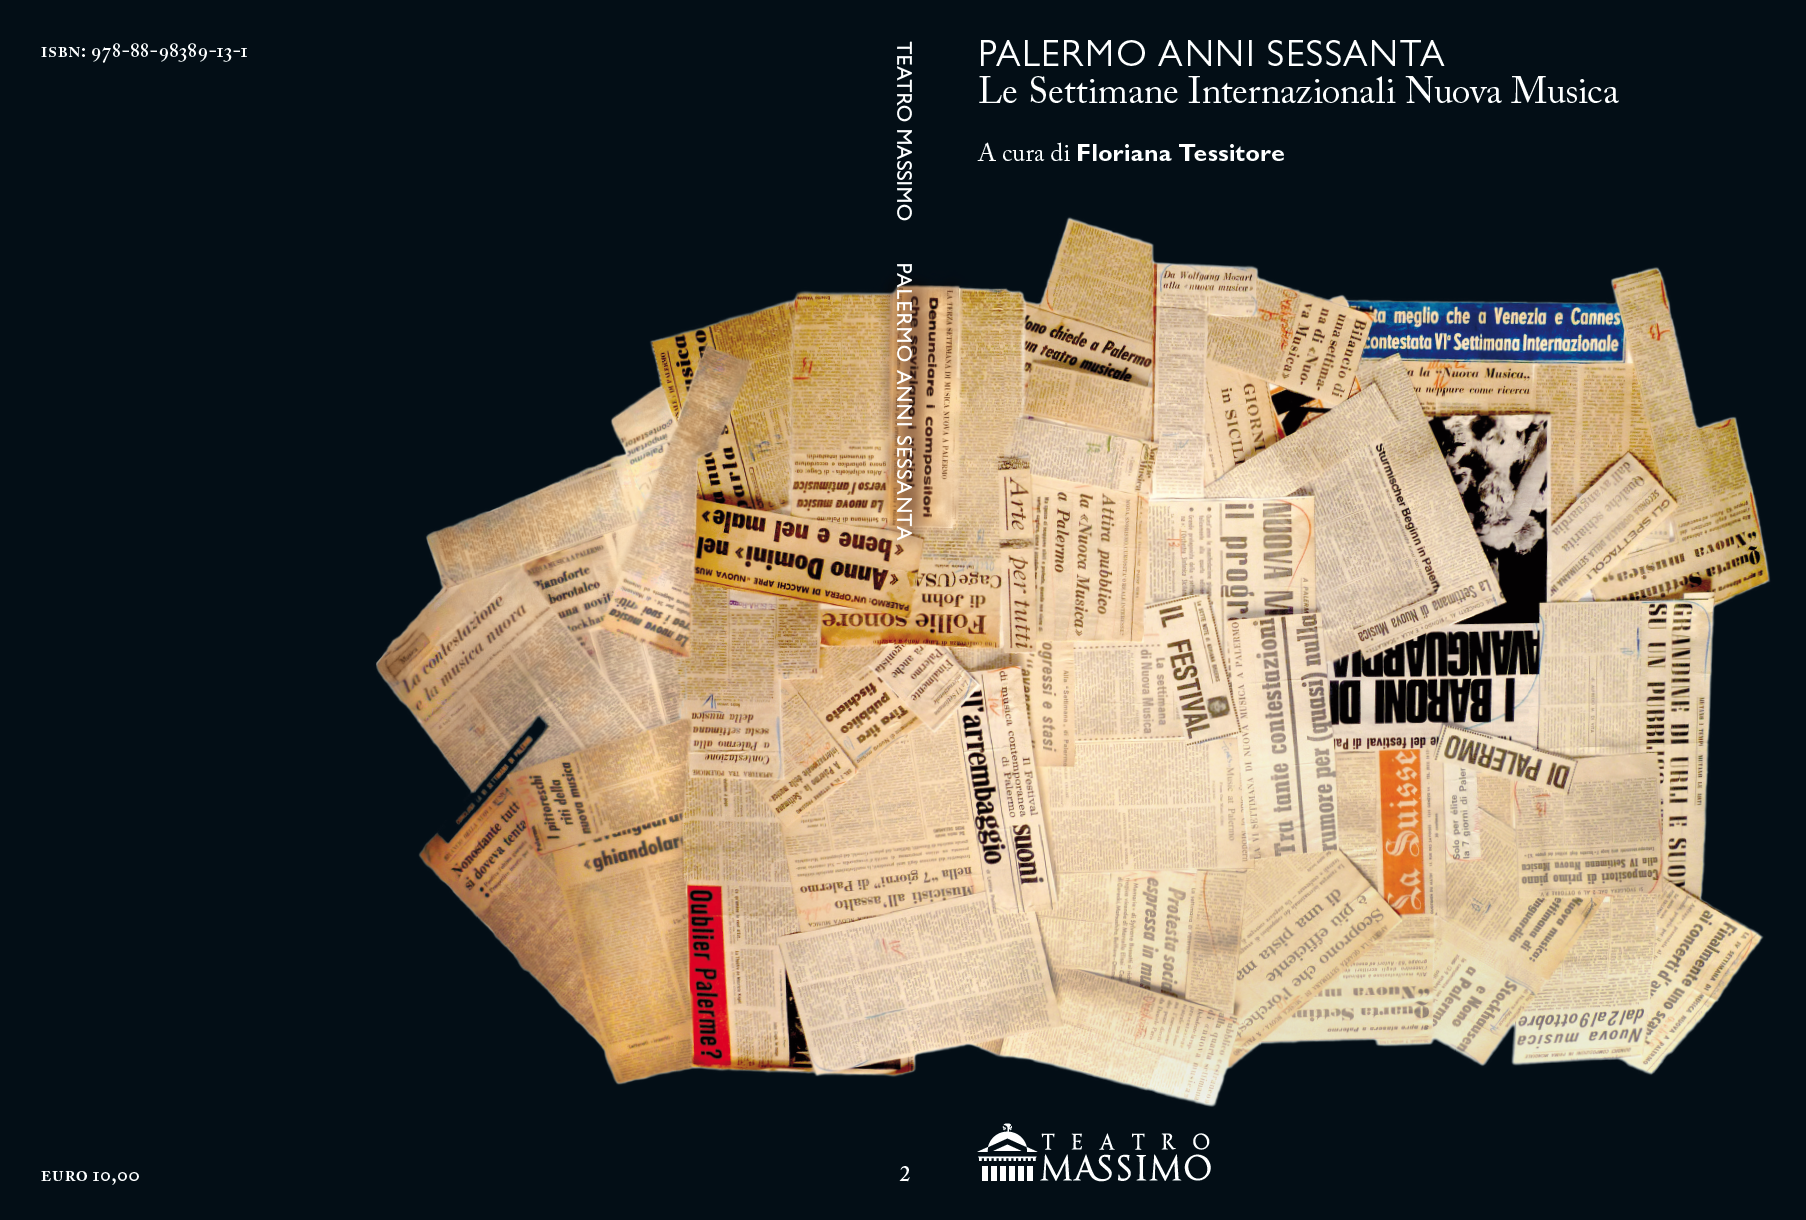 Palermo anni Sessanta, Teatro Massimo 2013-2014